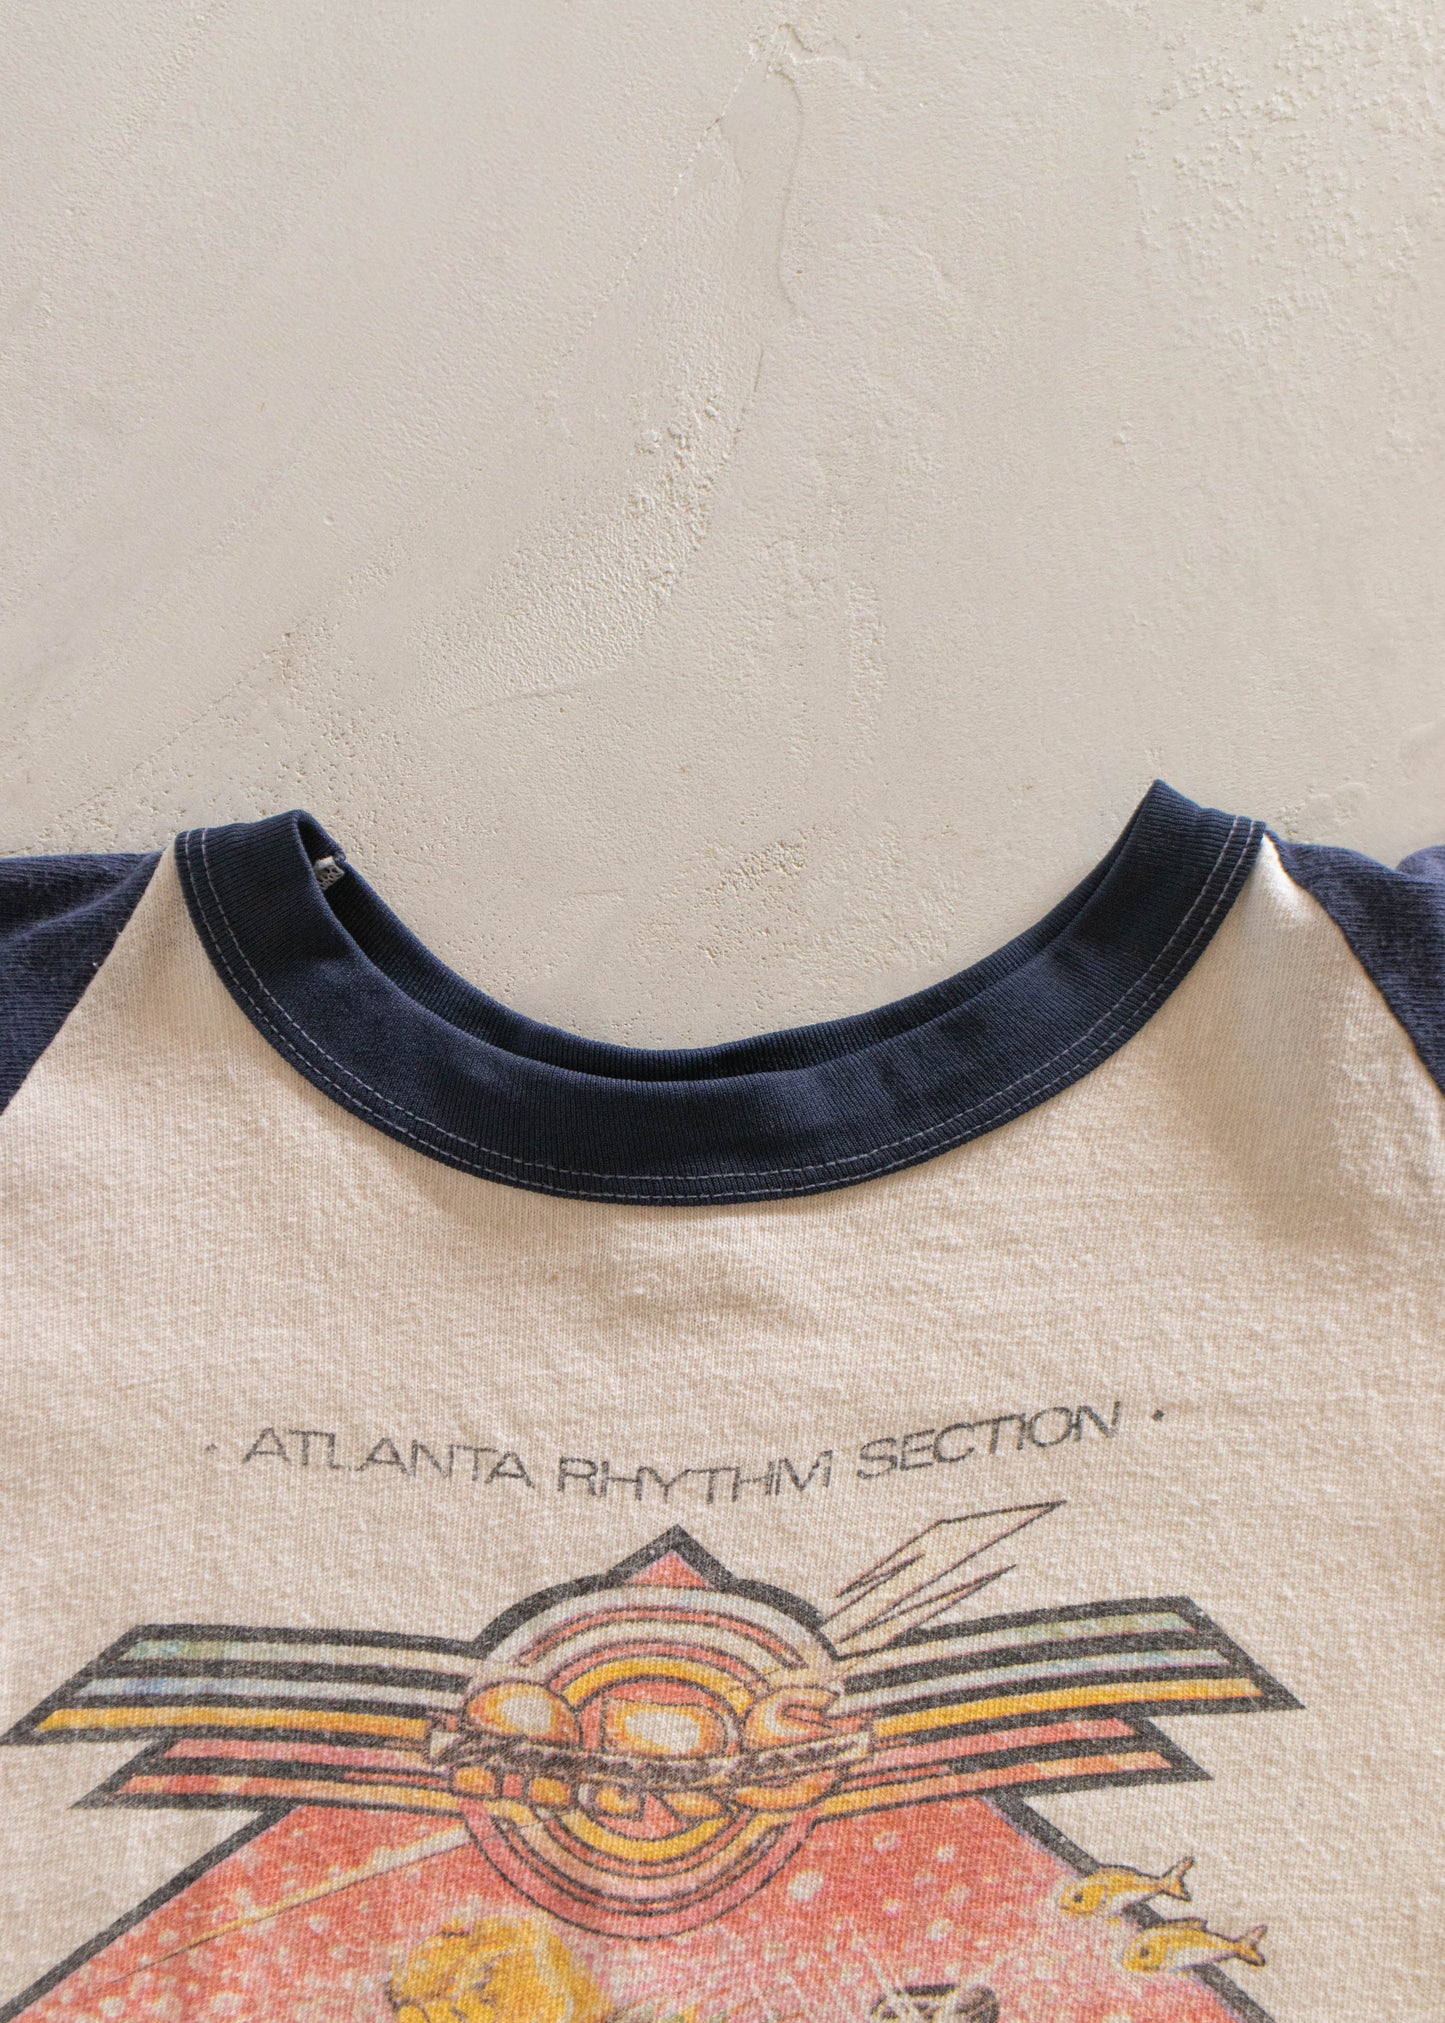 1970s Atlanta Rhythm Section Champagne Jam Baseball T-Shirt Size M/L